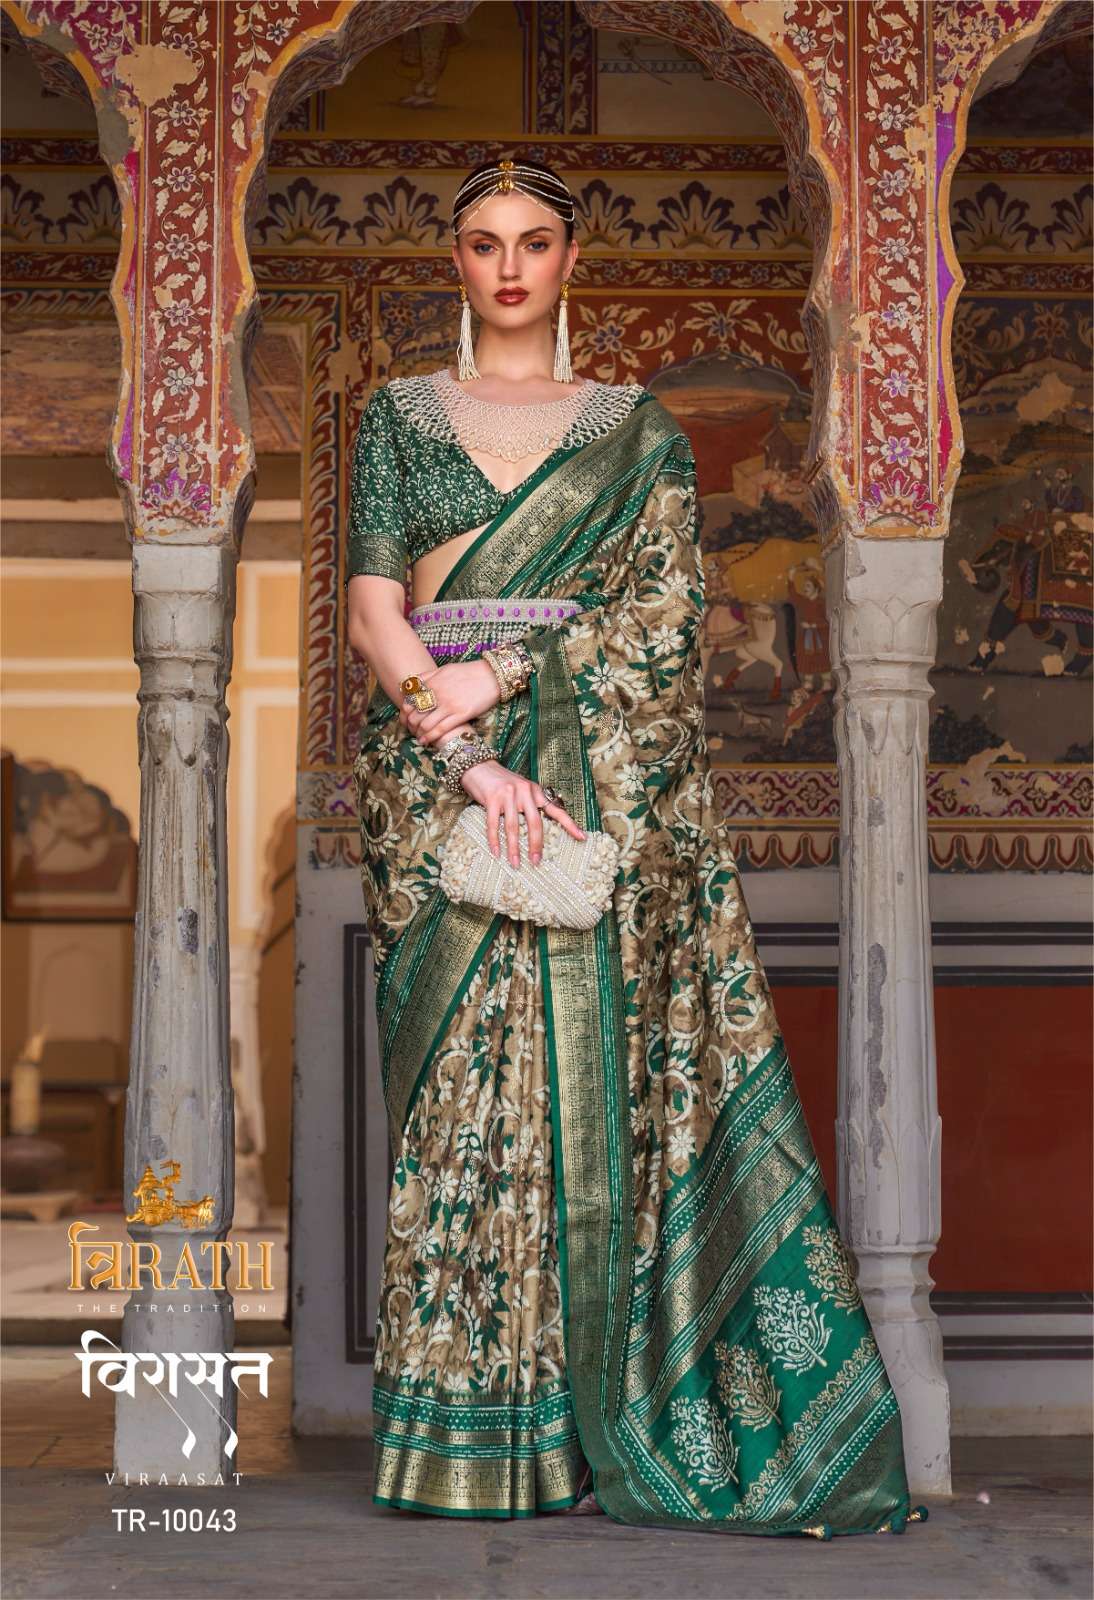 trirath present viraasat 10043-10054 series designer wedding wear patola sarees 